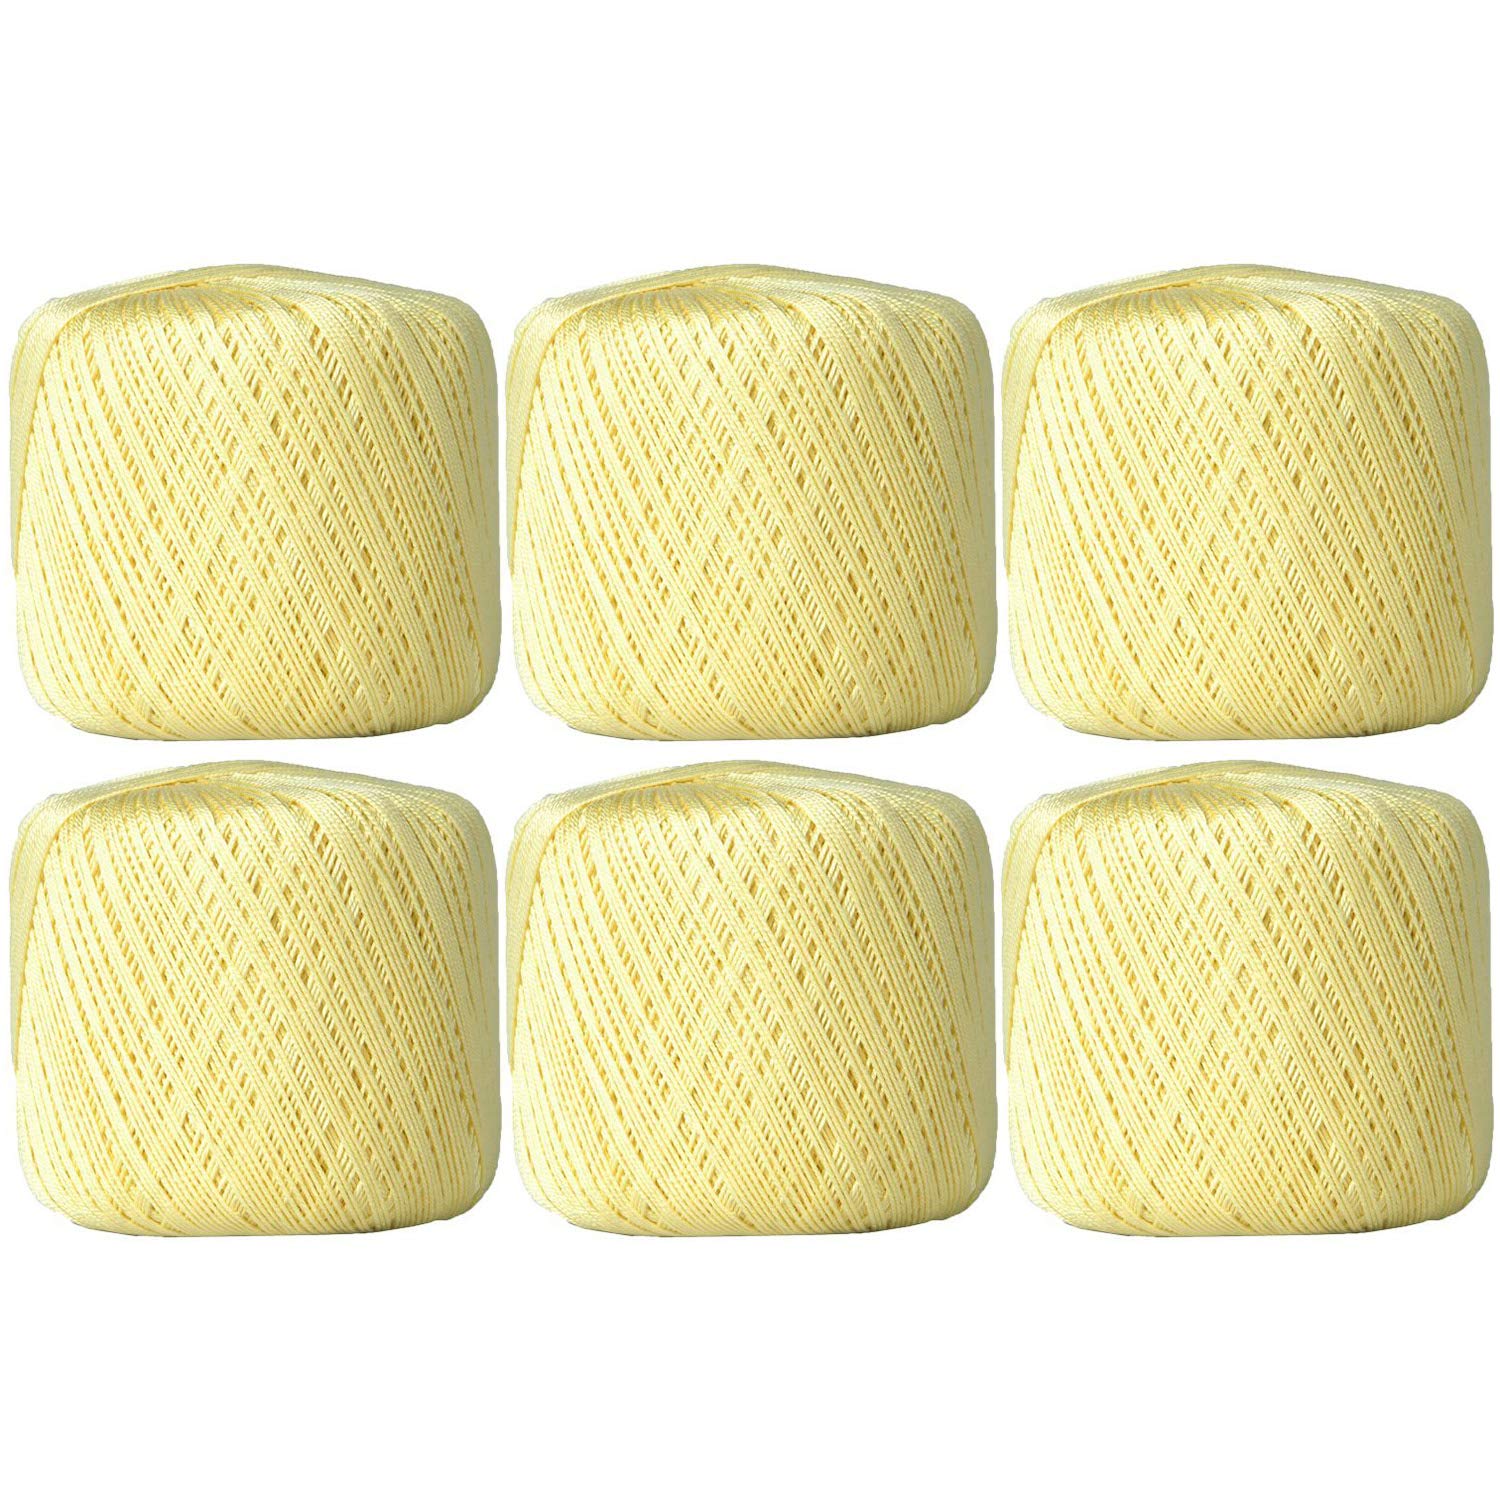 Threadart 6 Ball Pack Threadart 100 Pure Cotton Crochet Thread - Size 10 - Color 6 - Lemonade - Size 10 And 3 - Singles And Bulk Packs Ava